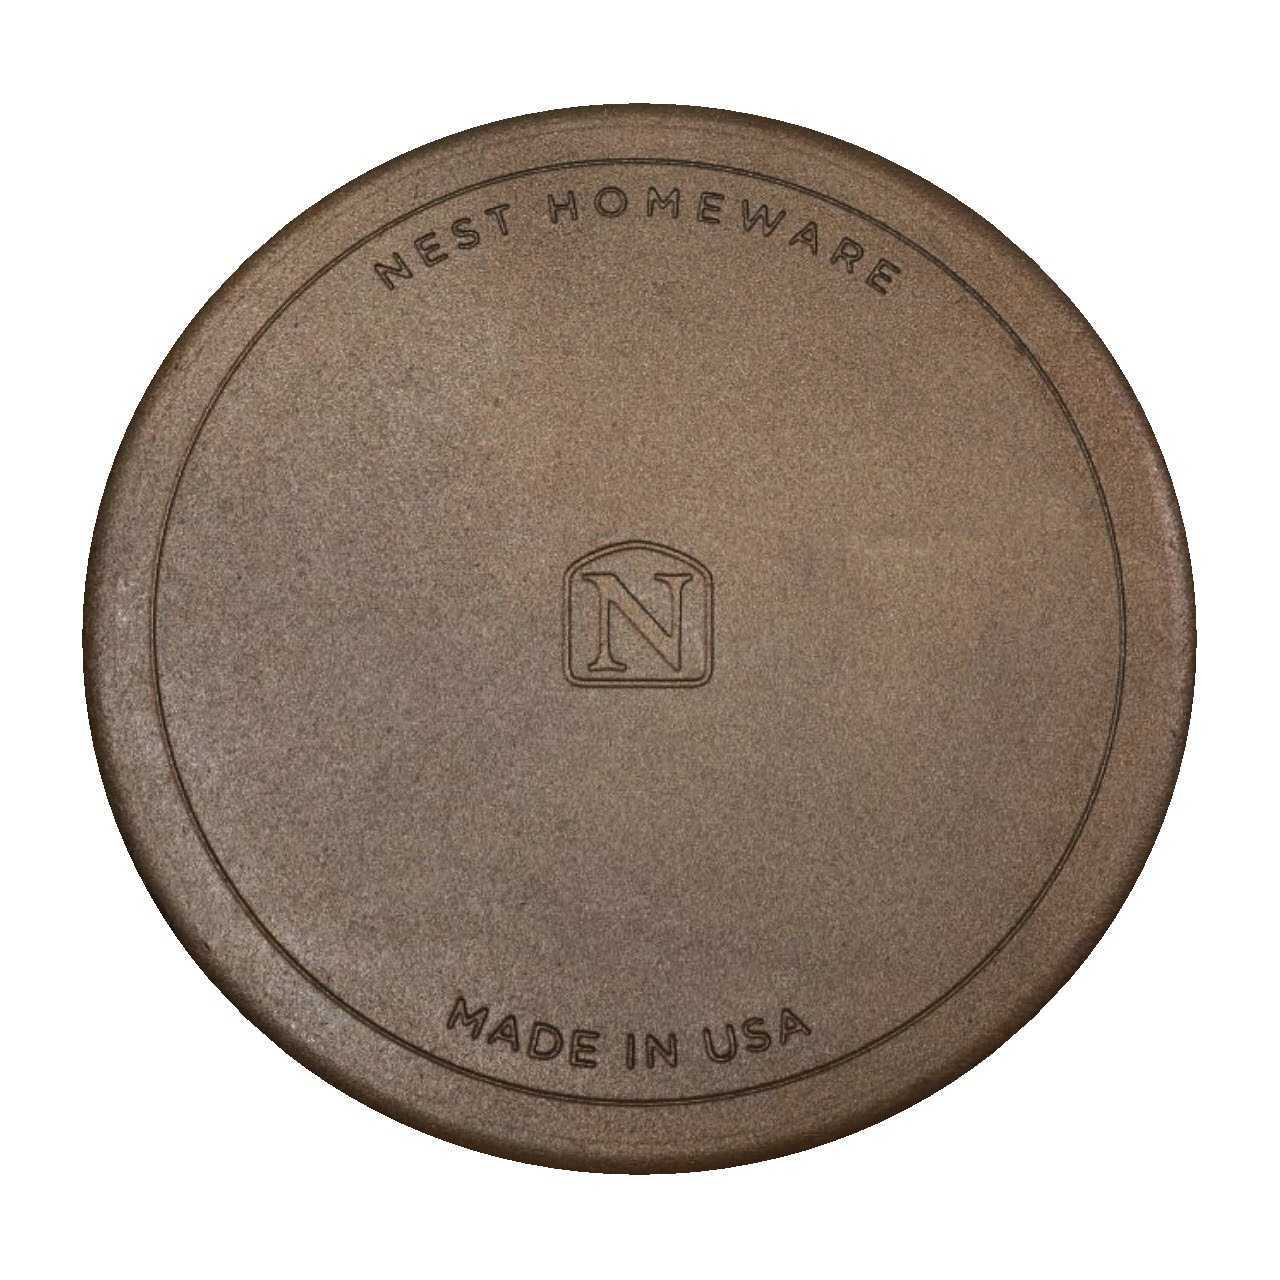 12 in Cast Iron Braising Pan – Nest Homeware